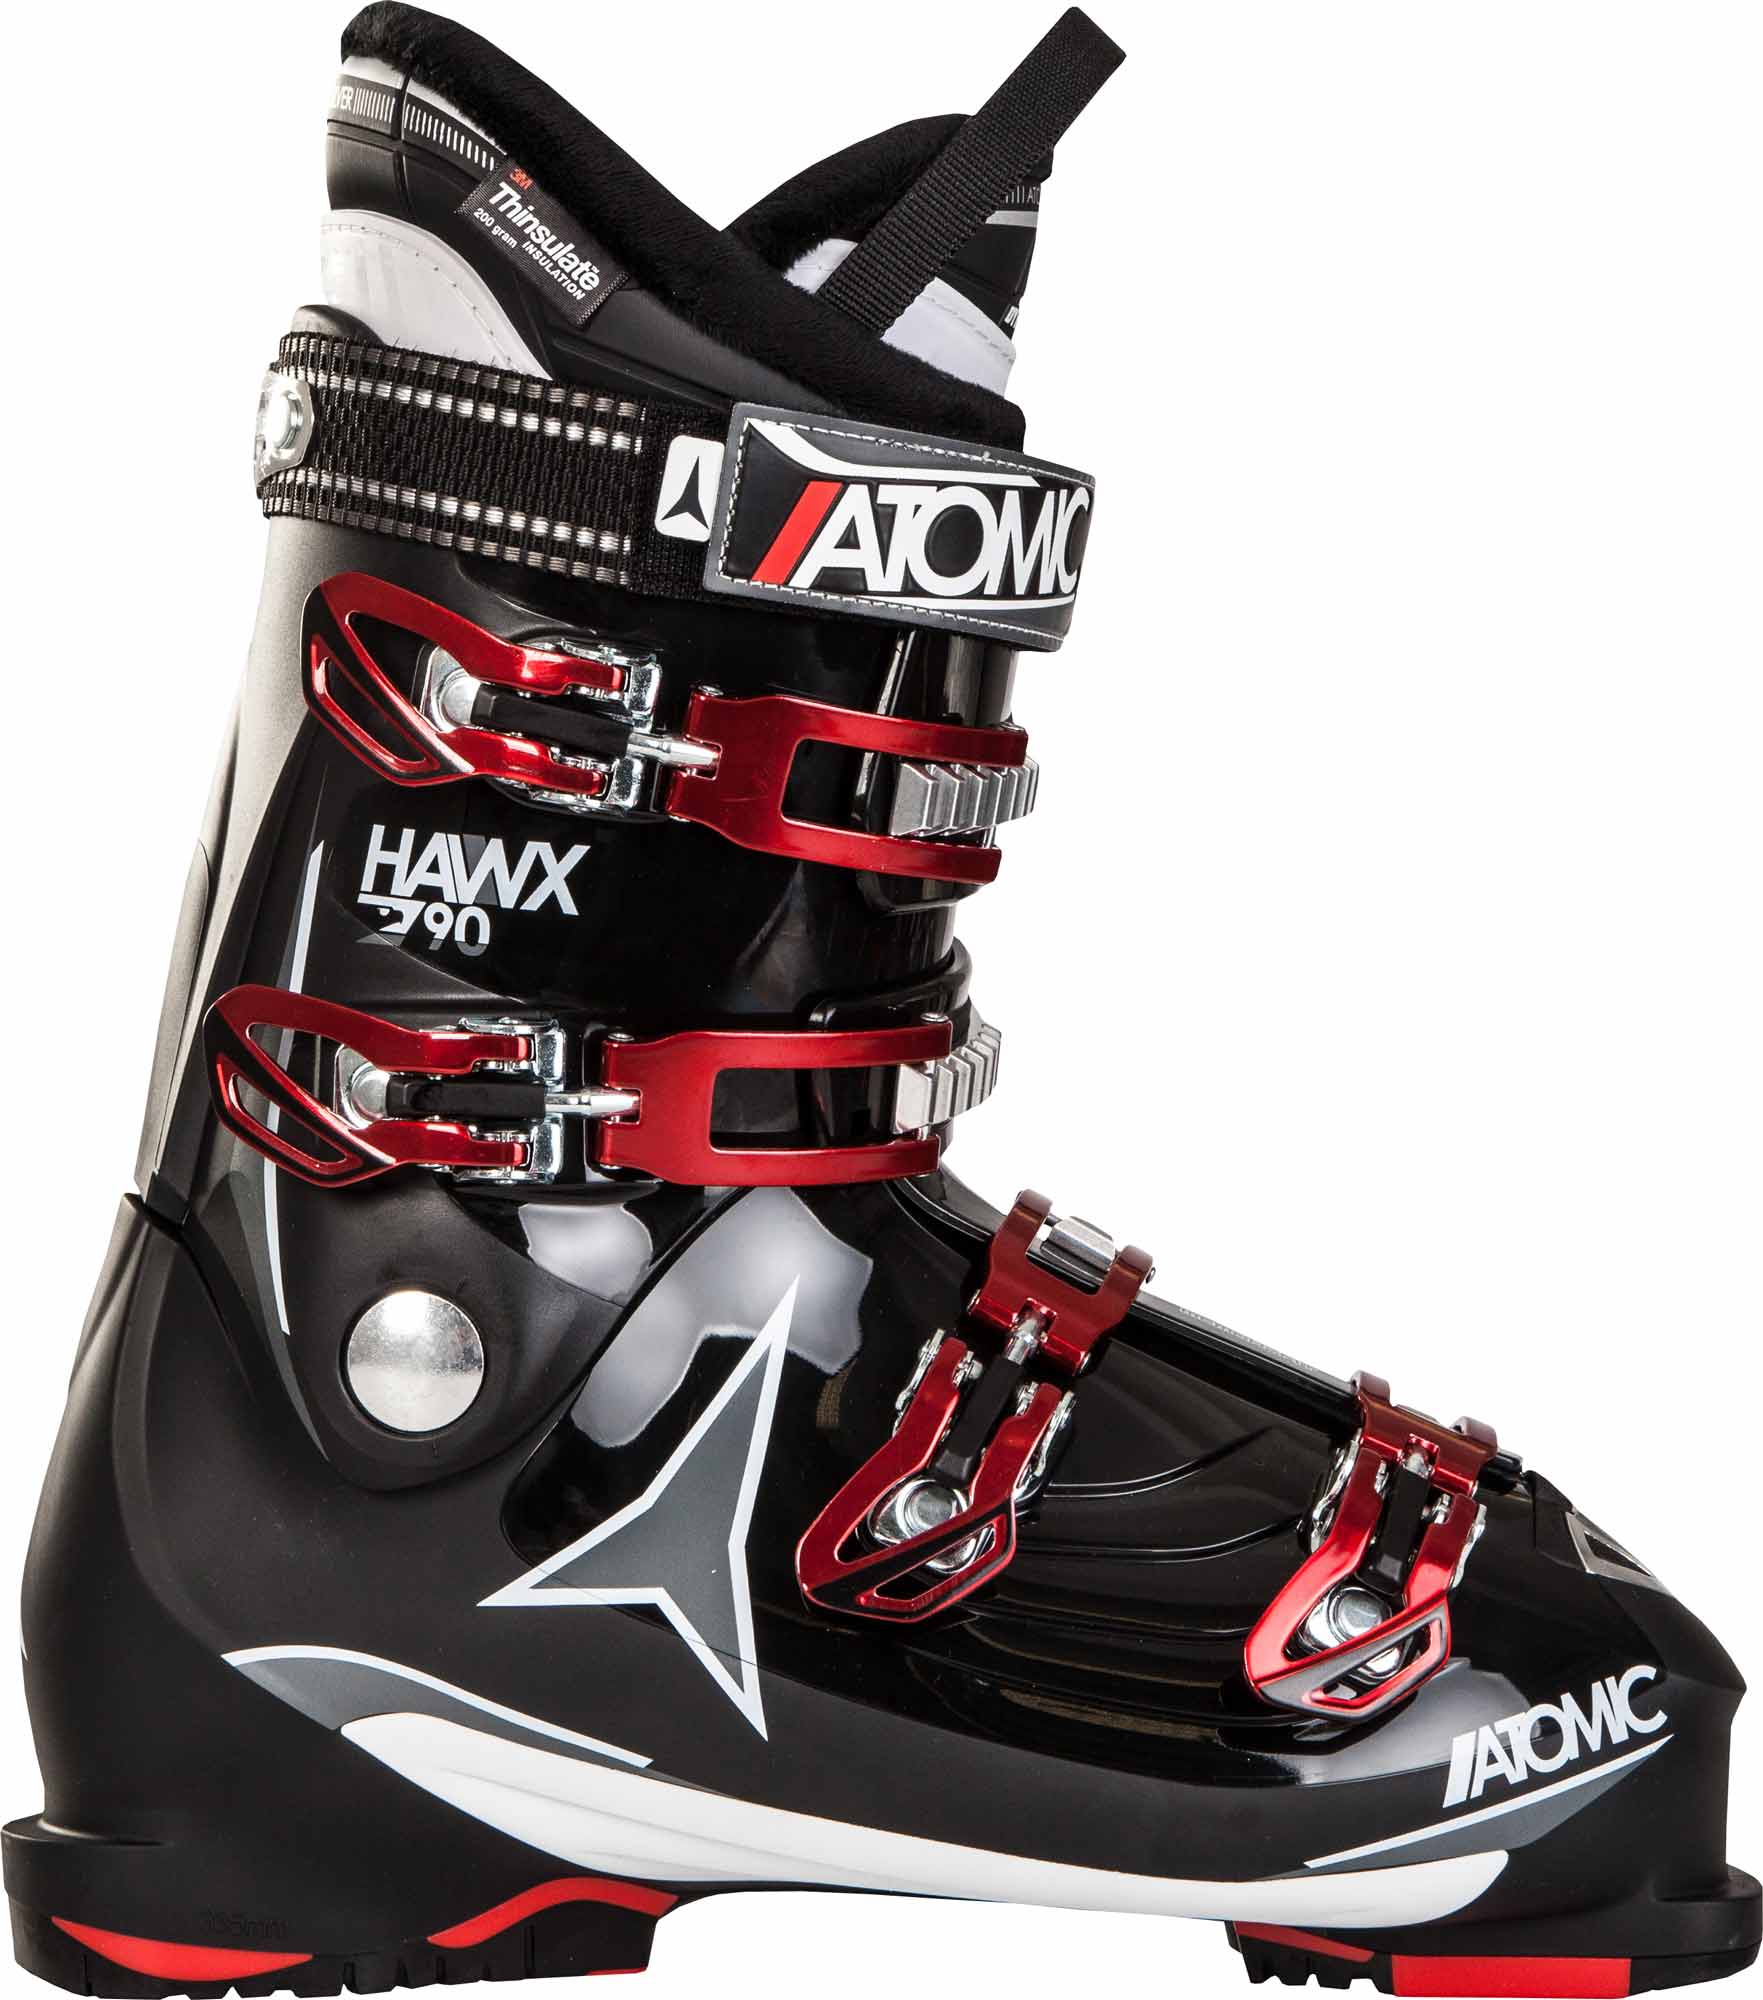 Men's Alpine Ski Boots